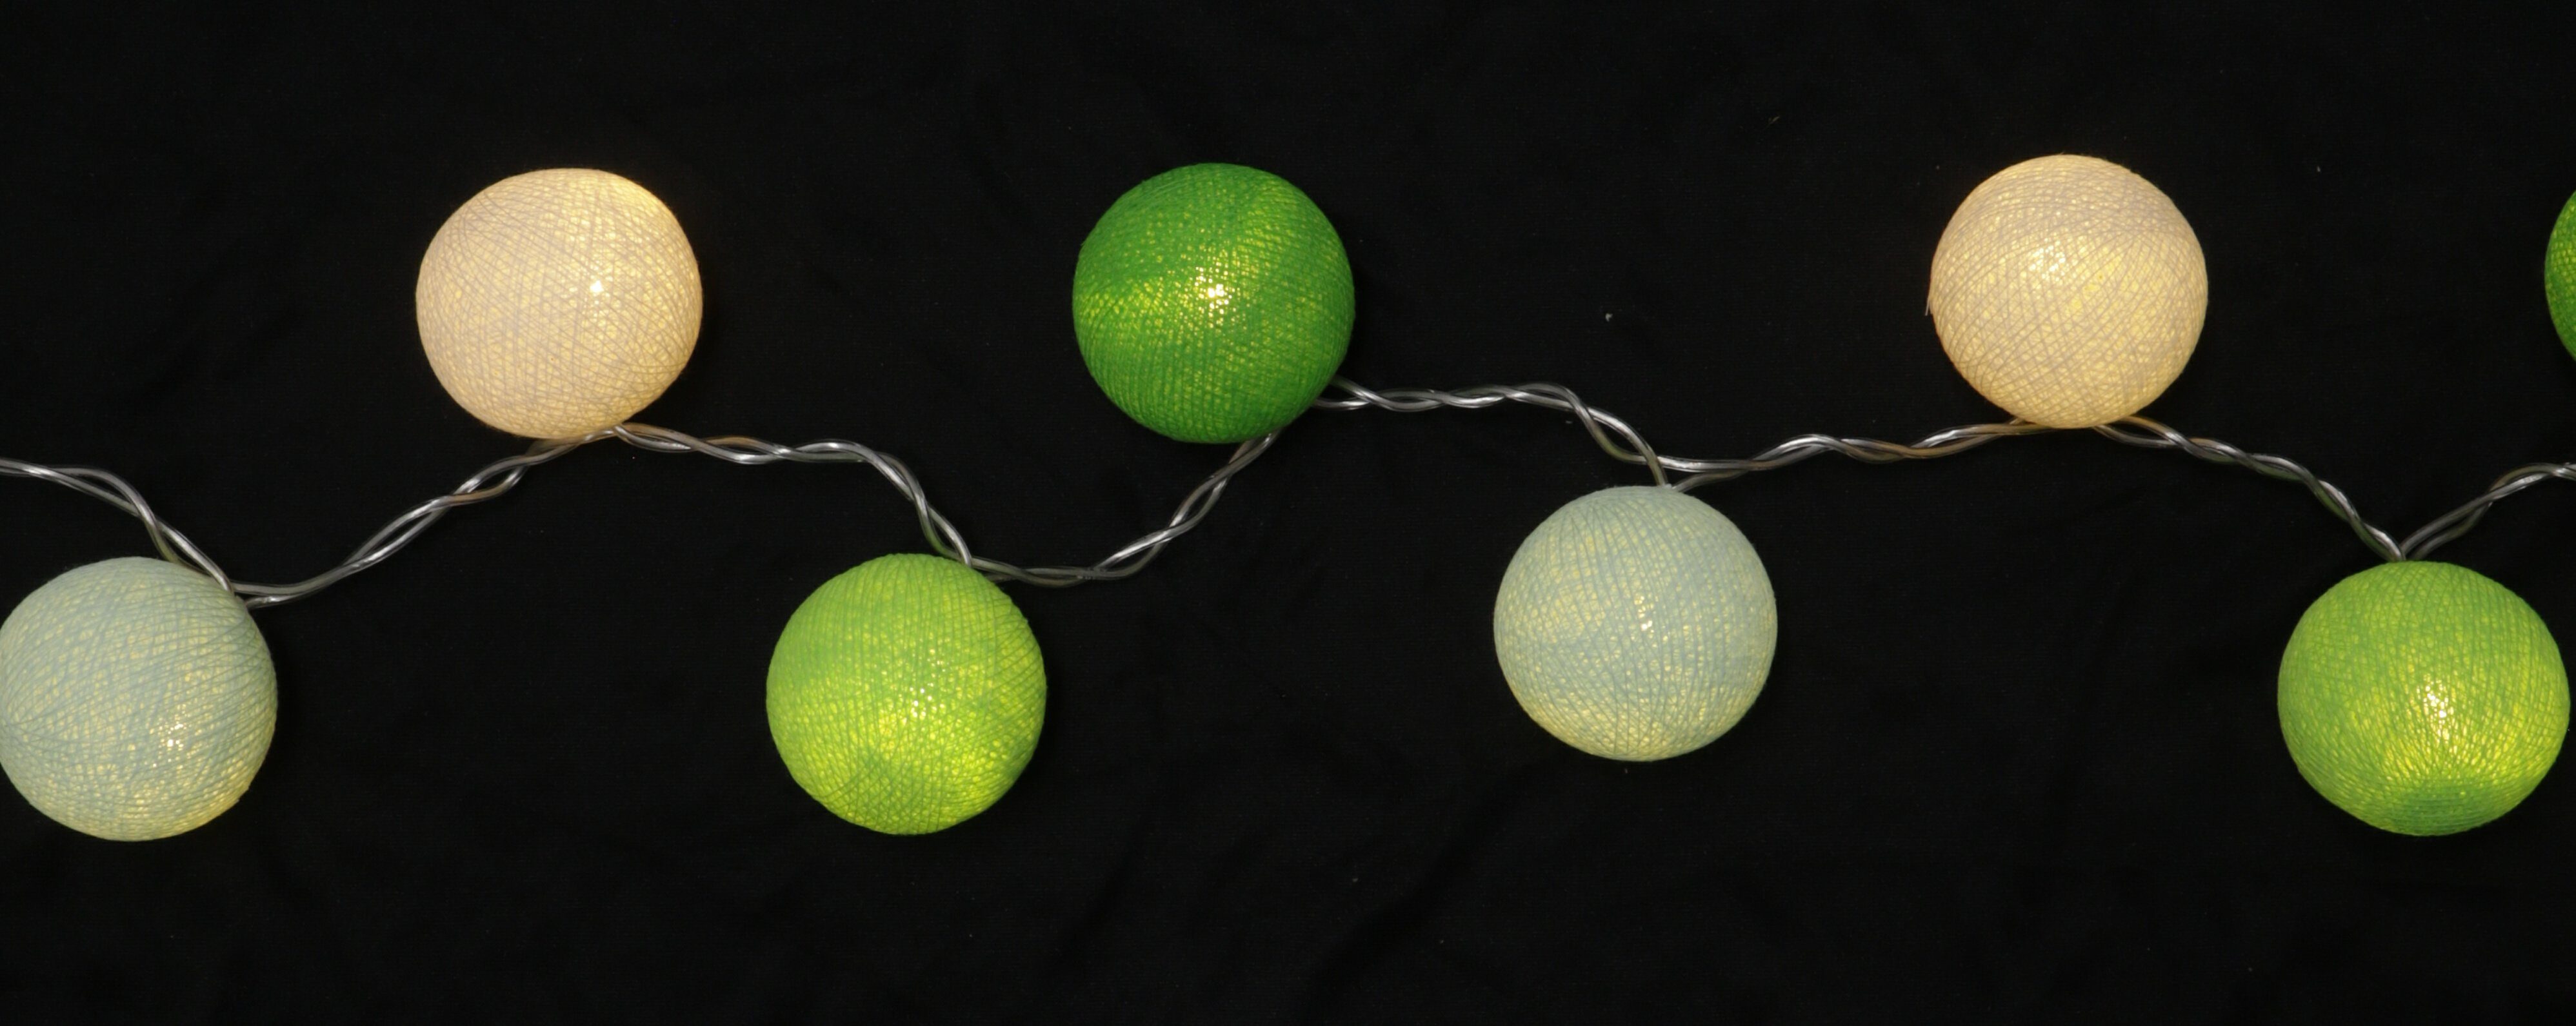 Guru-Shop LED-Lichterkette LED Ball Kugel grün/weiß Stoff Lampion.. Lichterkette